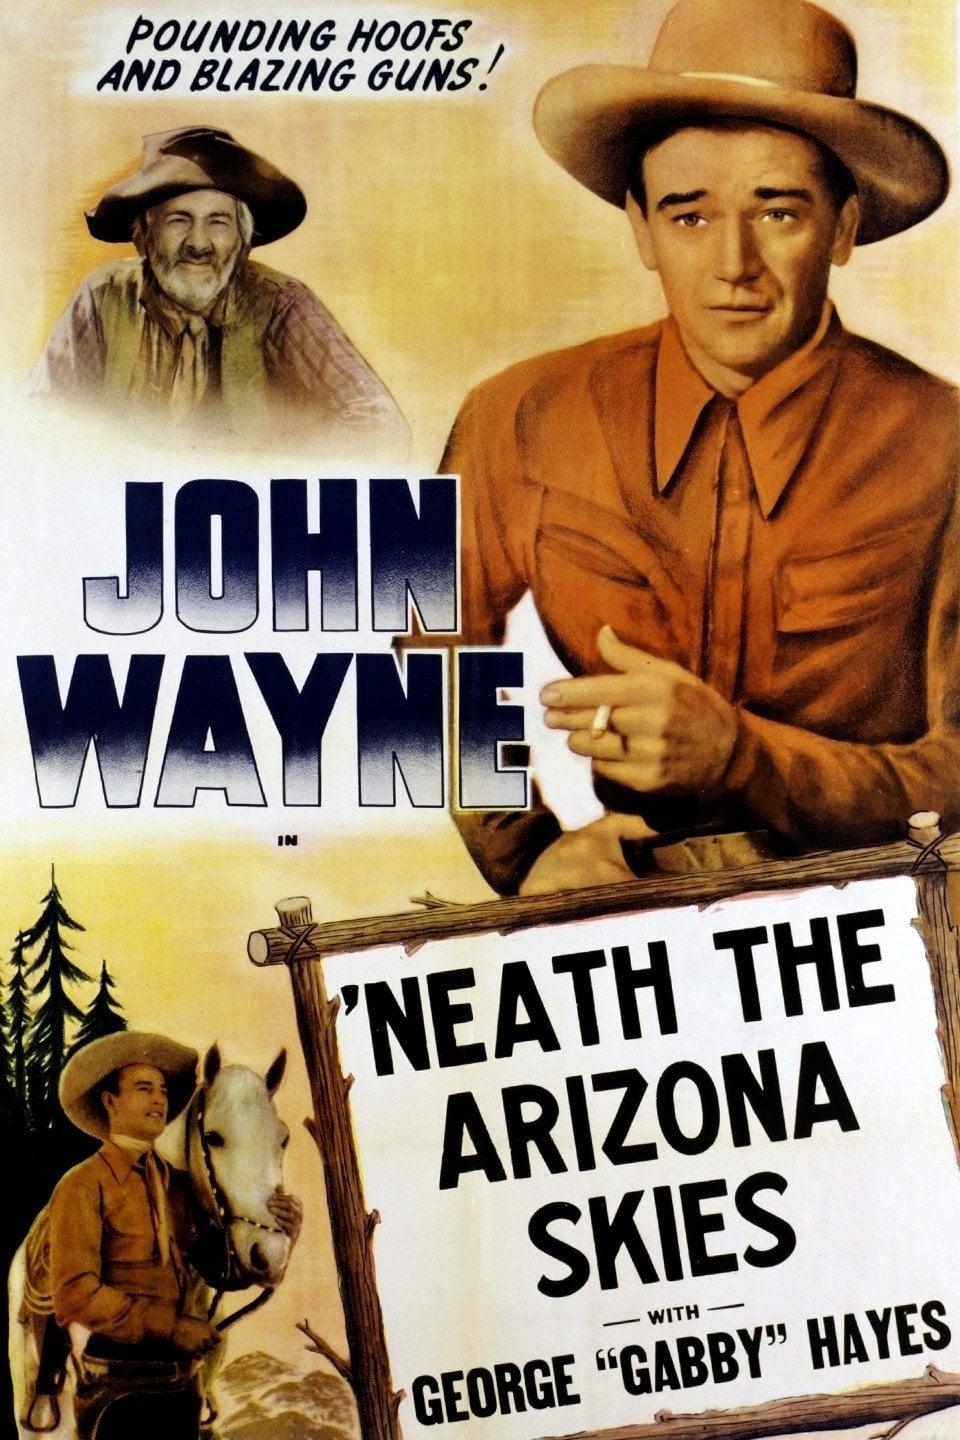 'Neath the Arizona Skies poster